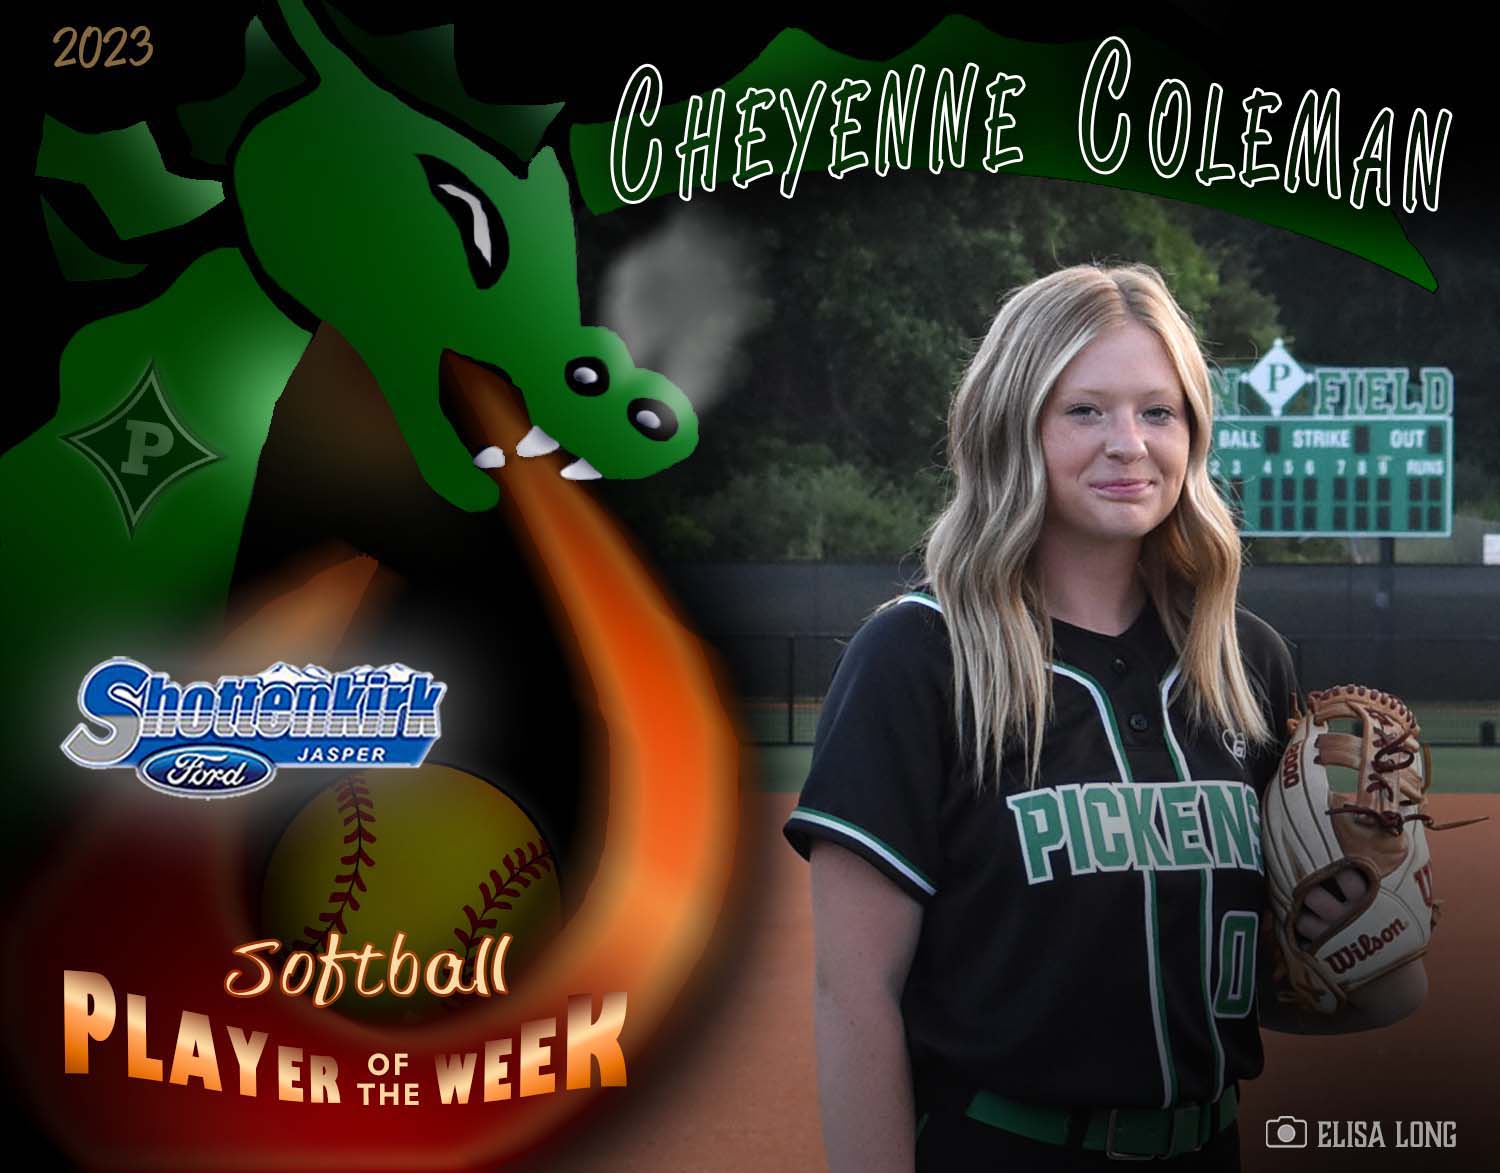 PHS Softball Player of the Week #5 - Cheyenne Coleman